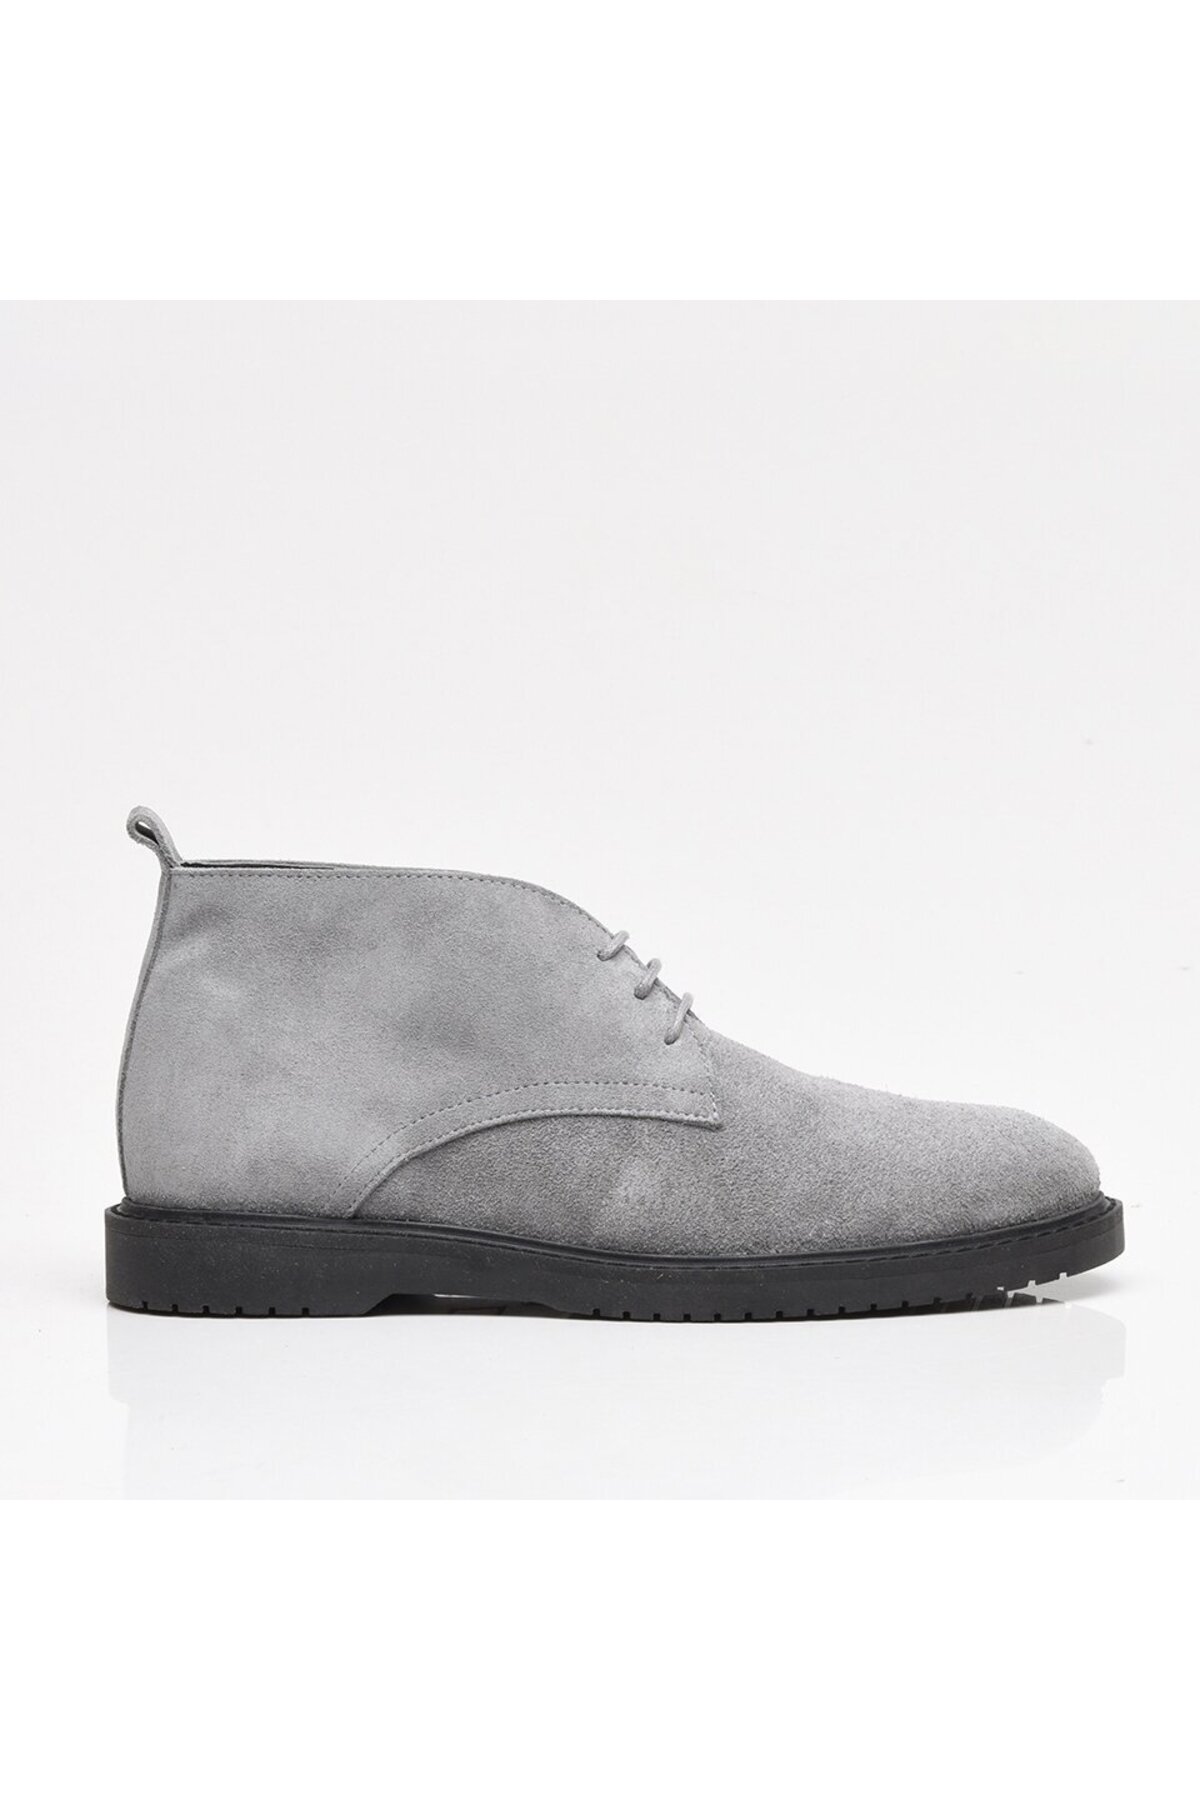 Levně Hotiç Genuine Leather Gray Men's Casual Boots